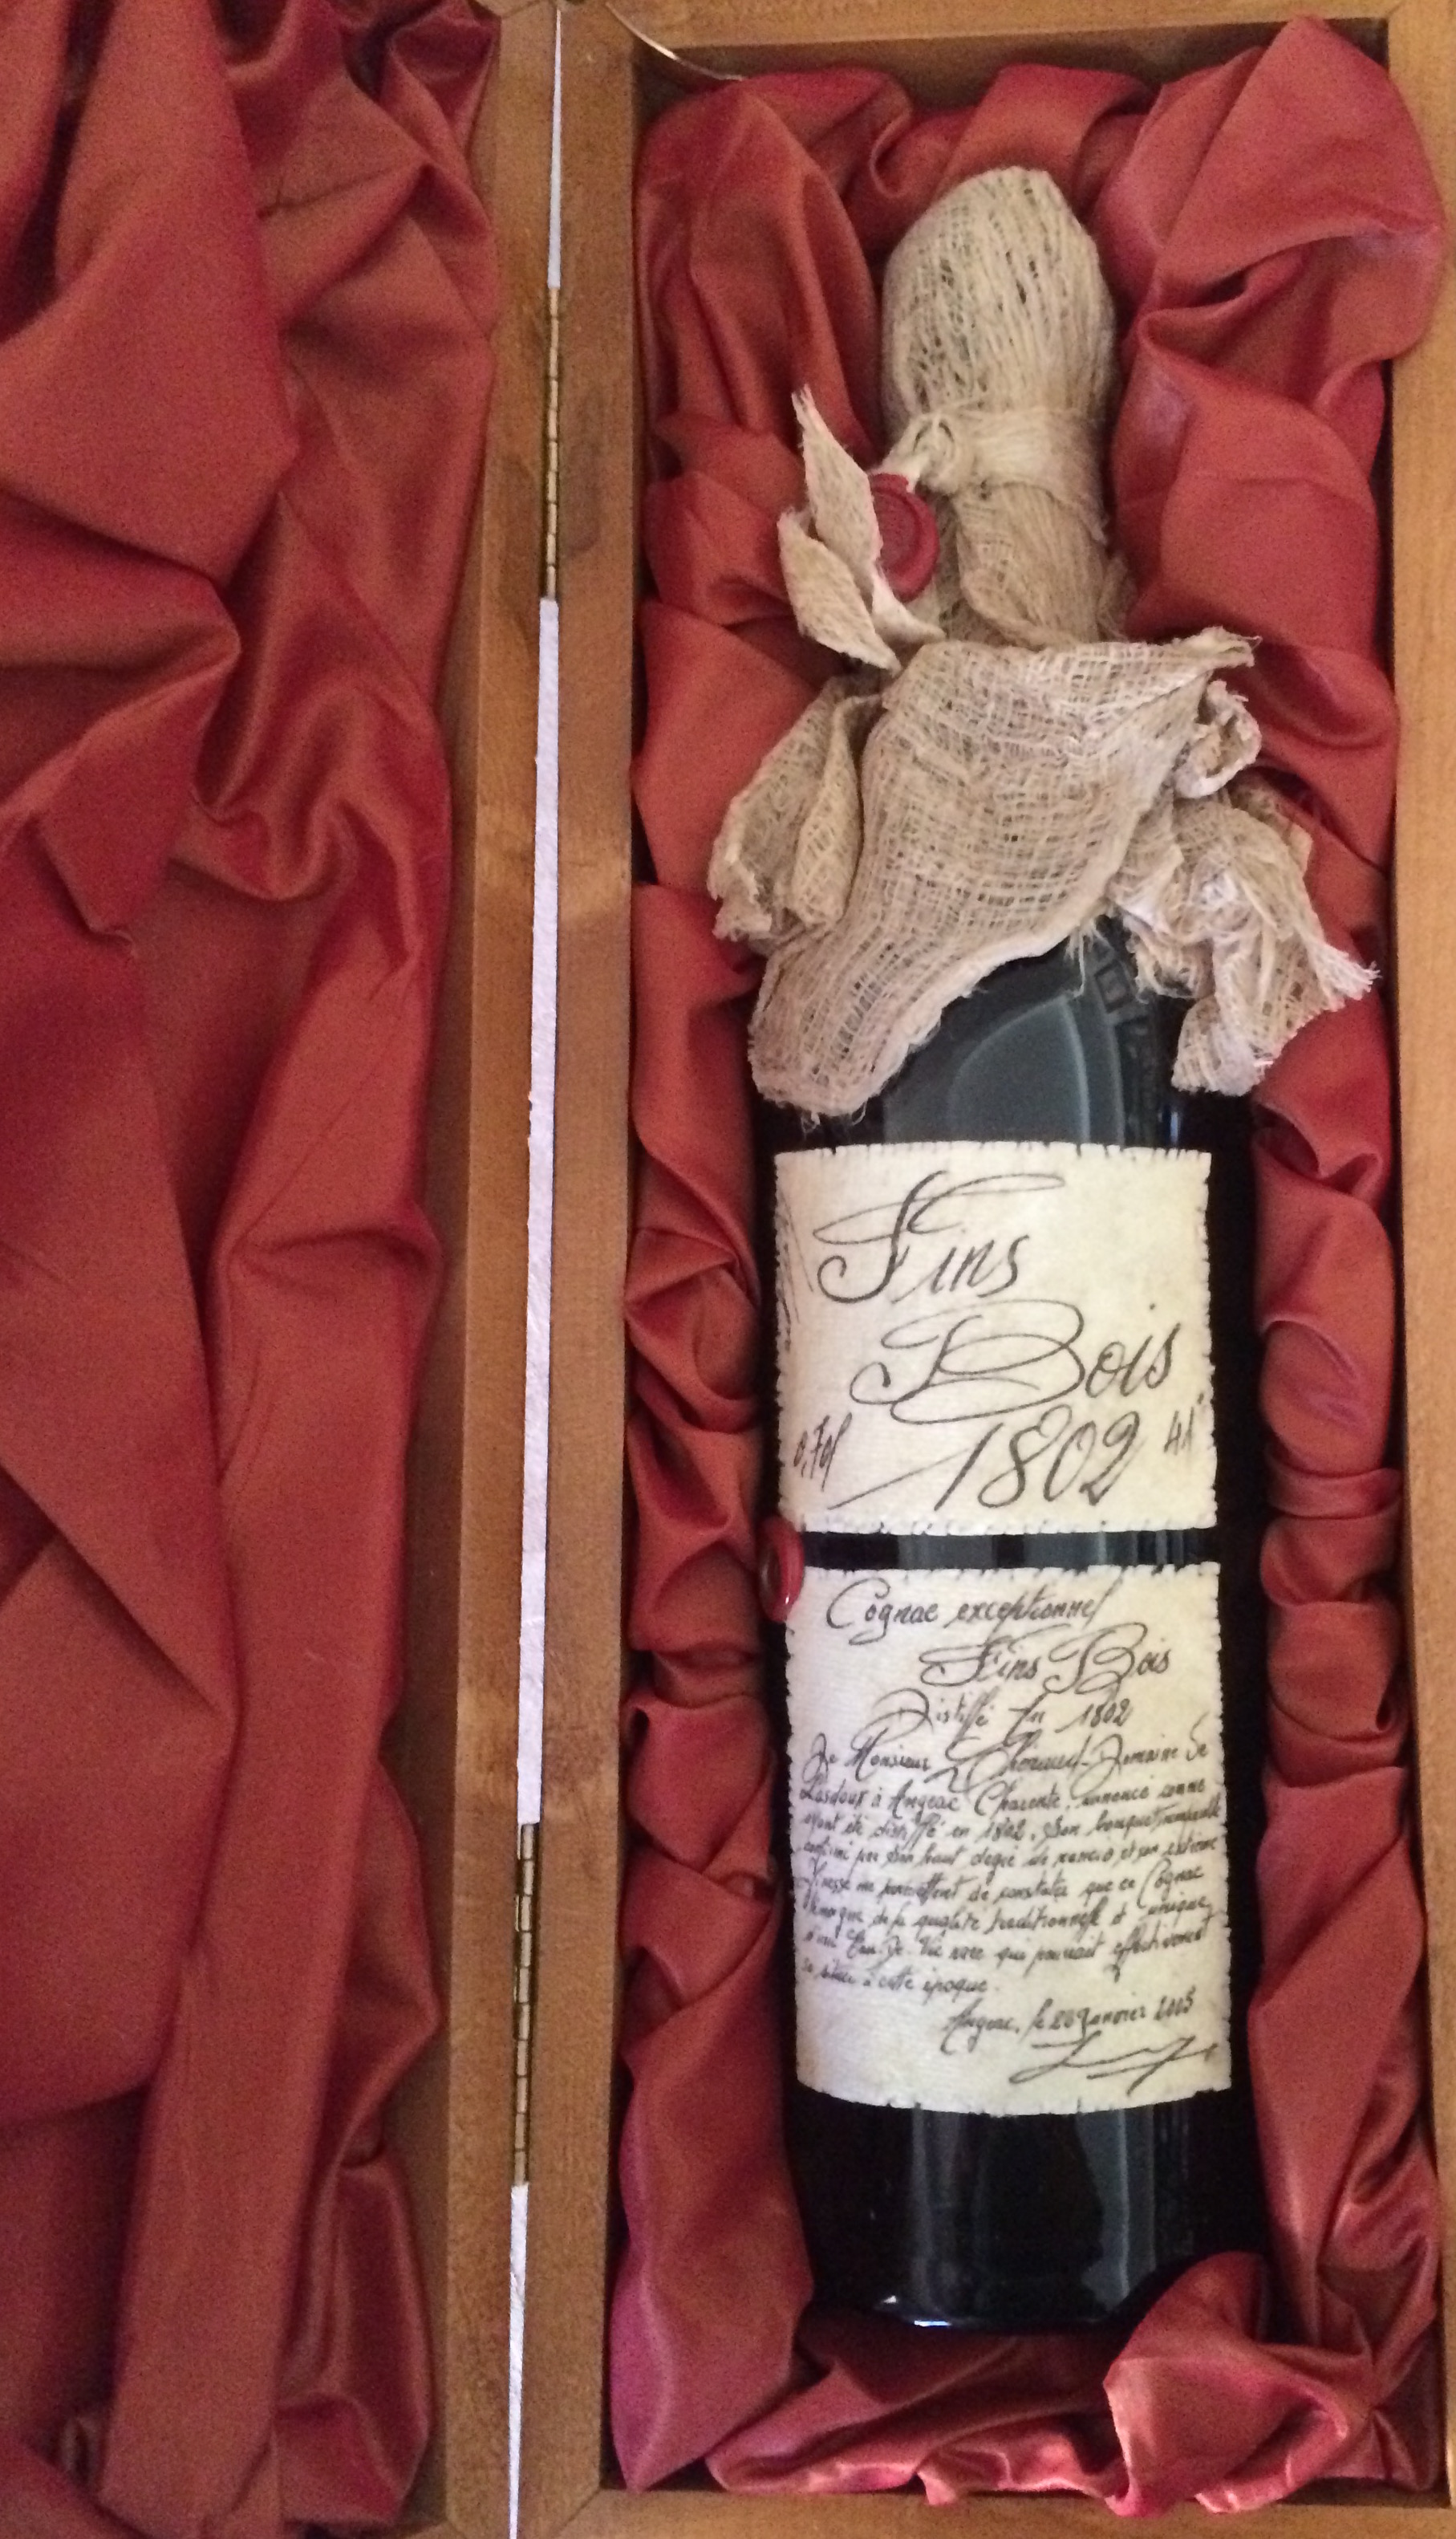 Lheraud Cognac, 1802, Fins Bois, wooden box | Леро Коньяк, 1802, Фин Буа, деревянная коробка